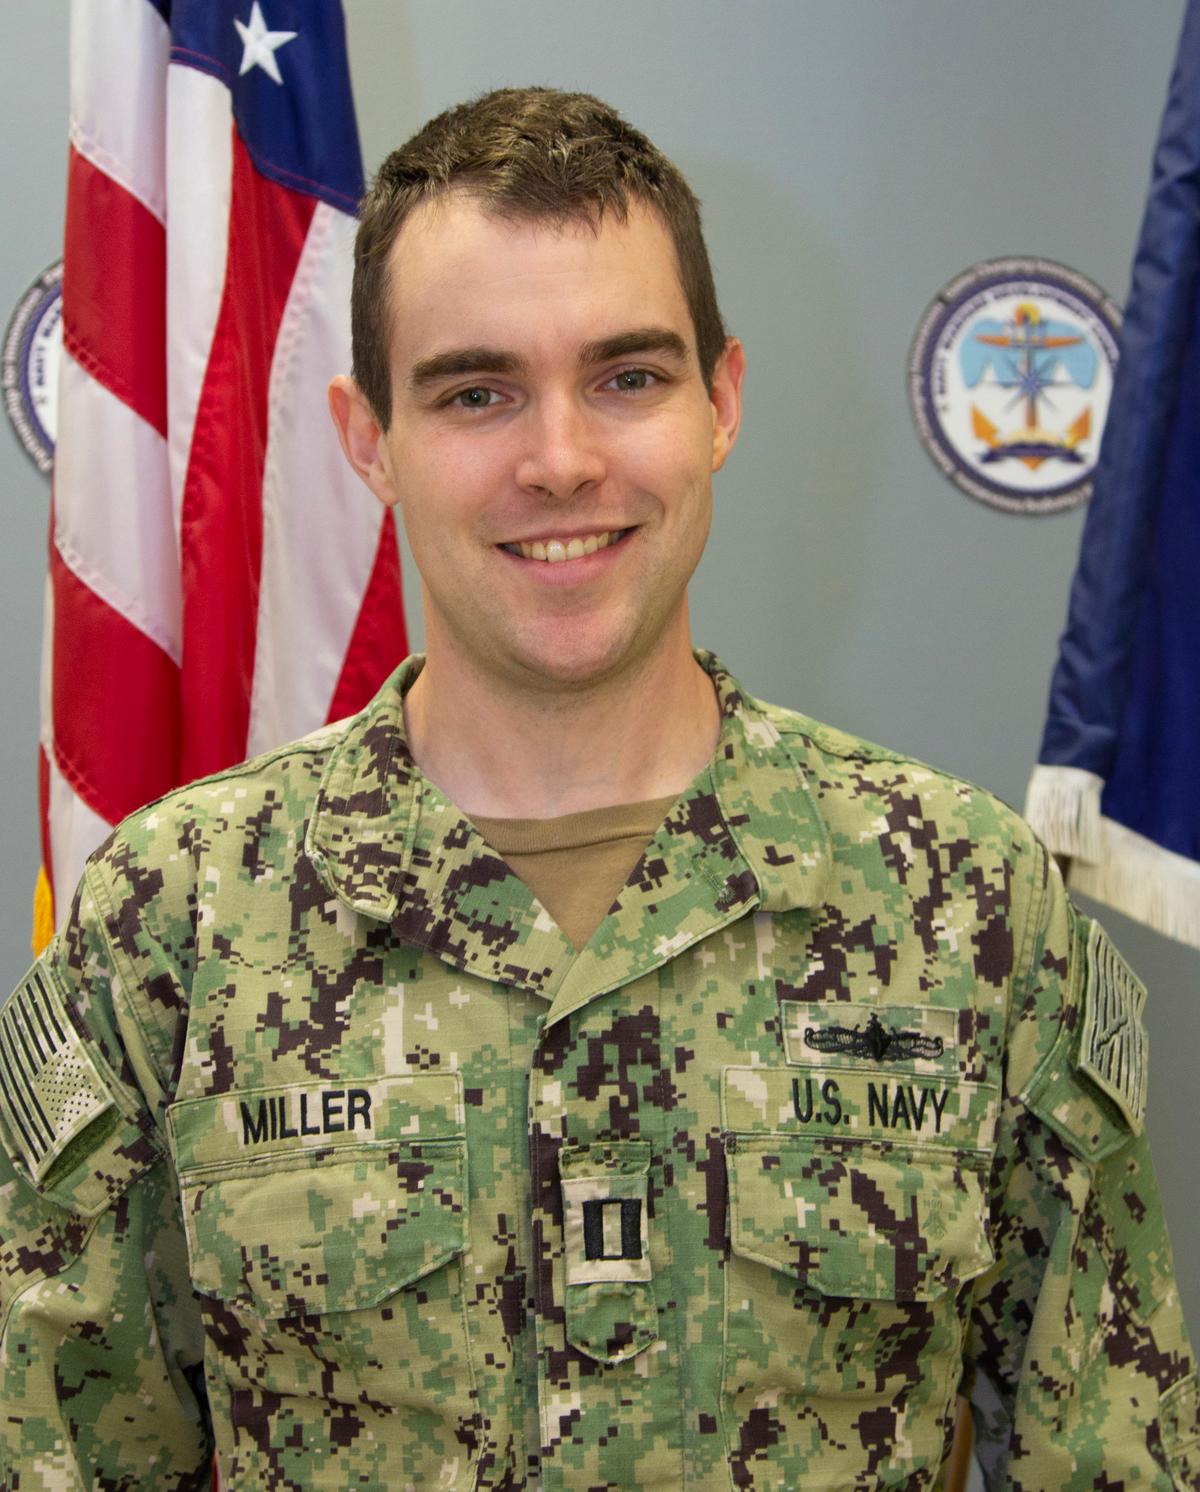 Lt. Miller with Navy Warfare Development Command, Naval Station Norfolk (<a href="https://www.dvidshub.net/image/6247391/norfolk-based-sailor-saves-lives-during-evening-run">Ian Delossantos</a>/U.S. Navy)